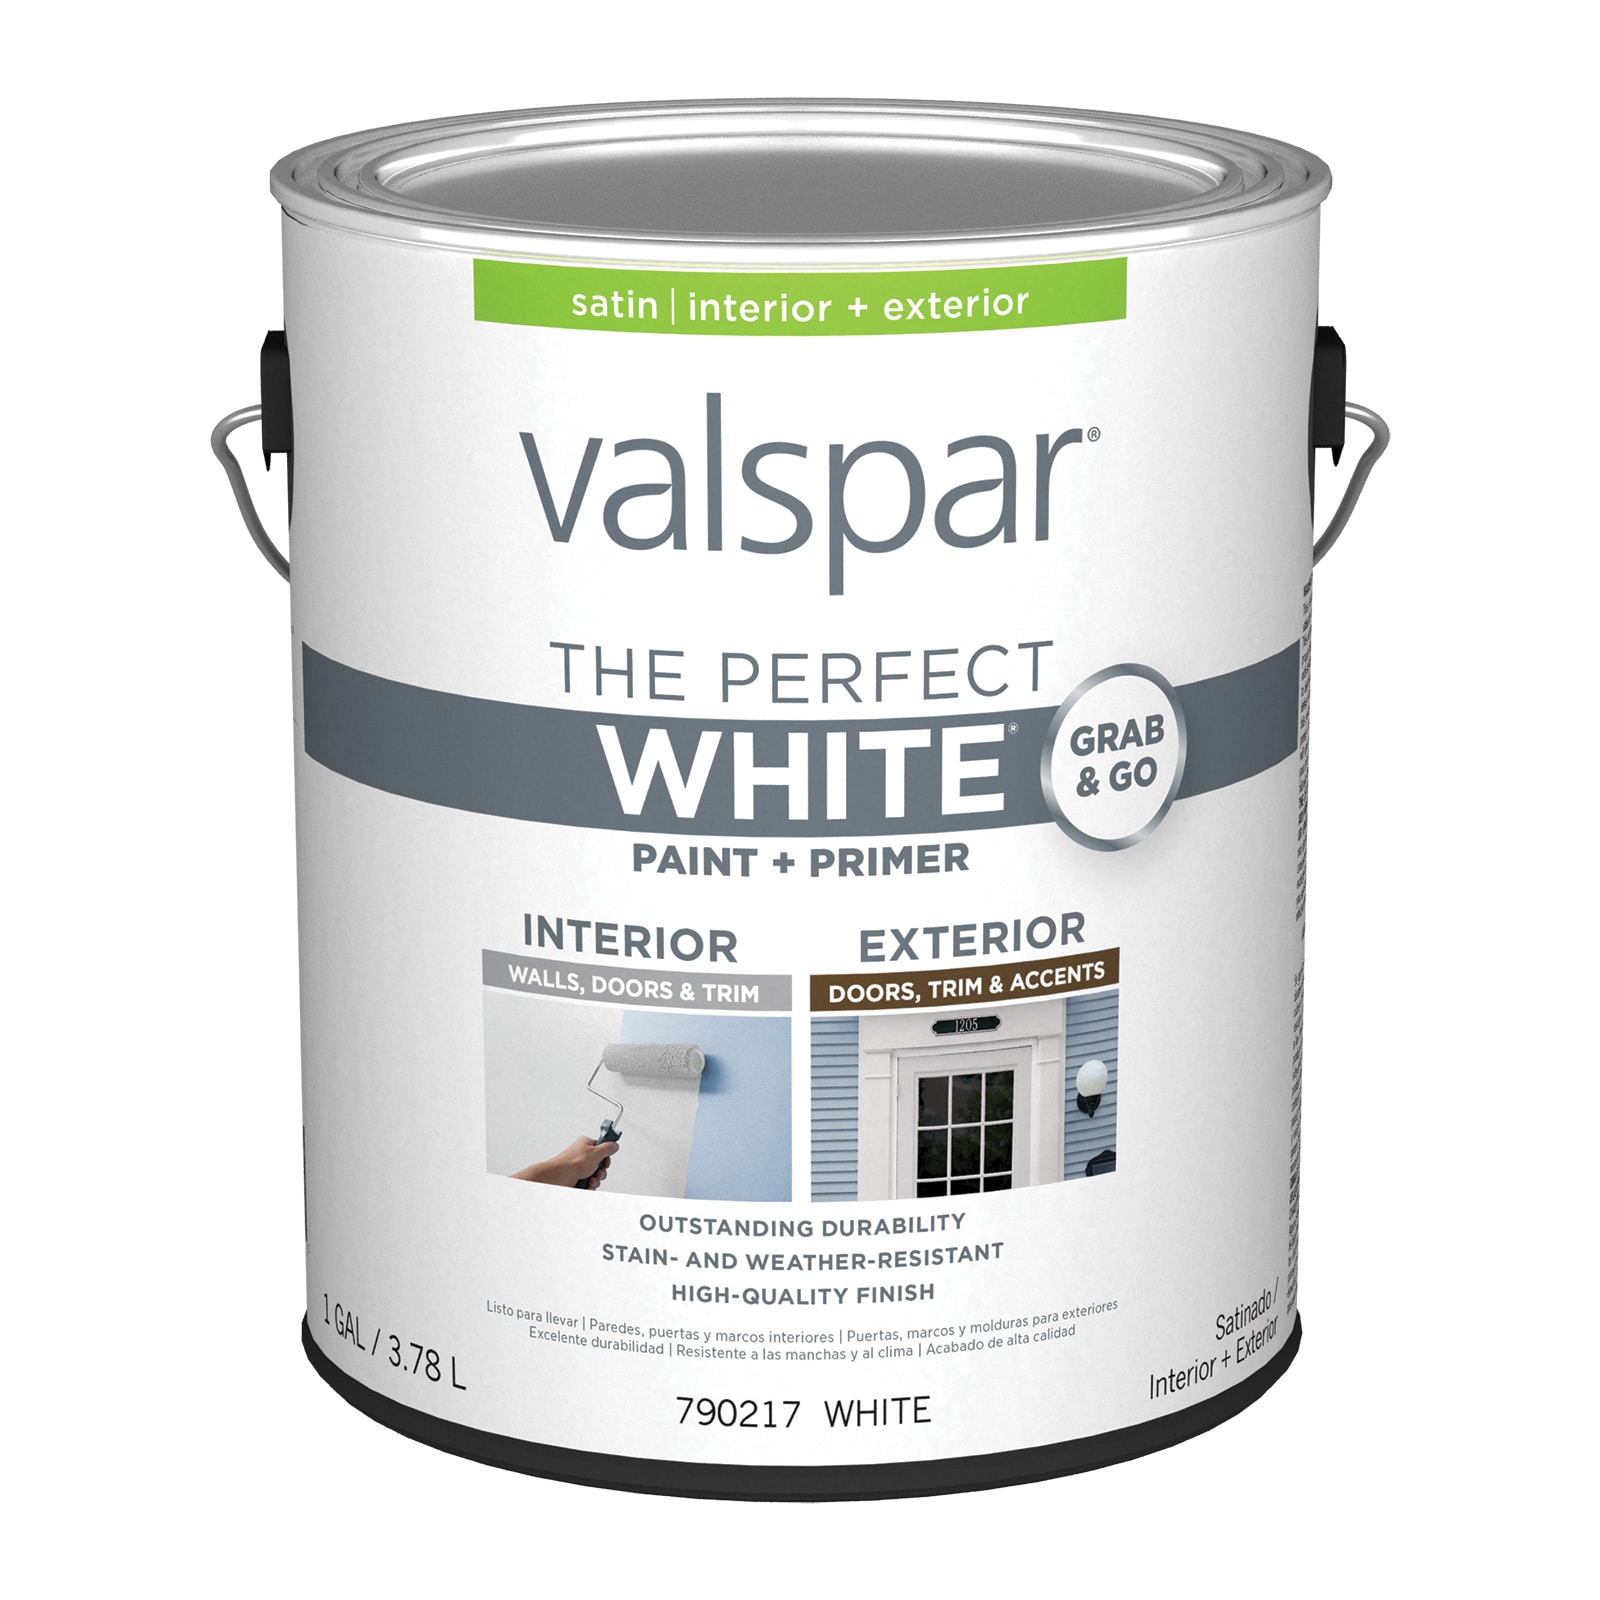 Valspar Satin Pure White Hgsw4006 Cabinet and Furniture Paint Enamel  (1-quart) at